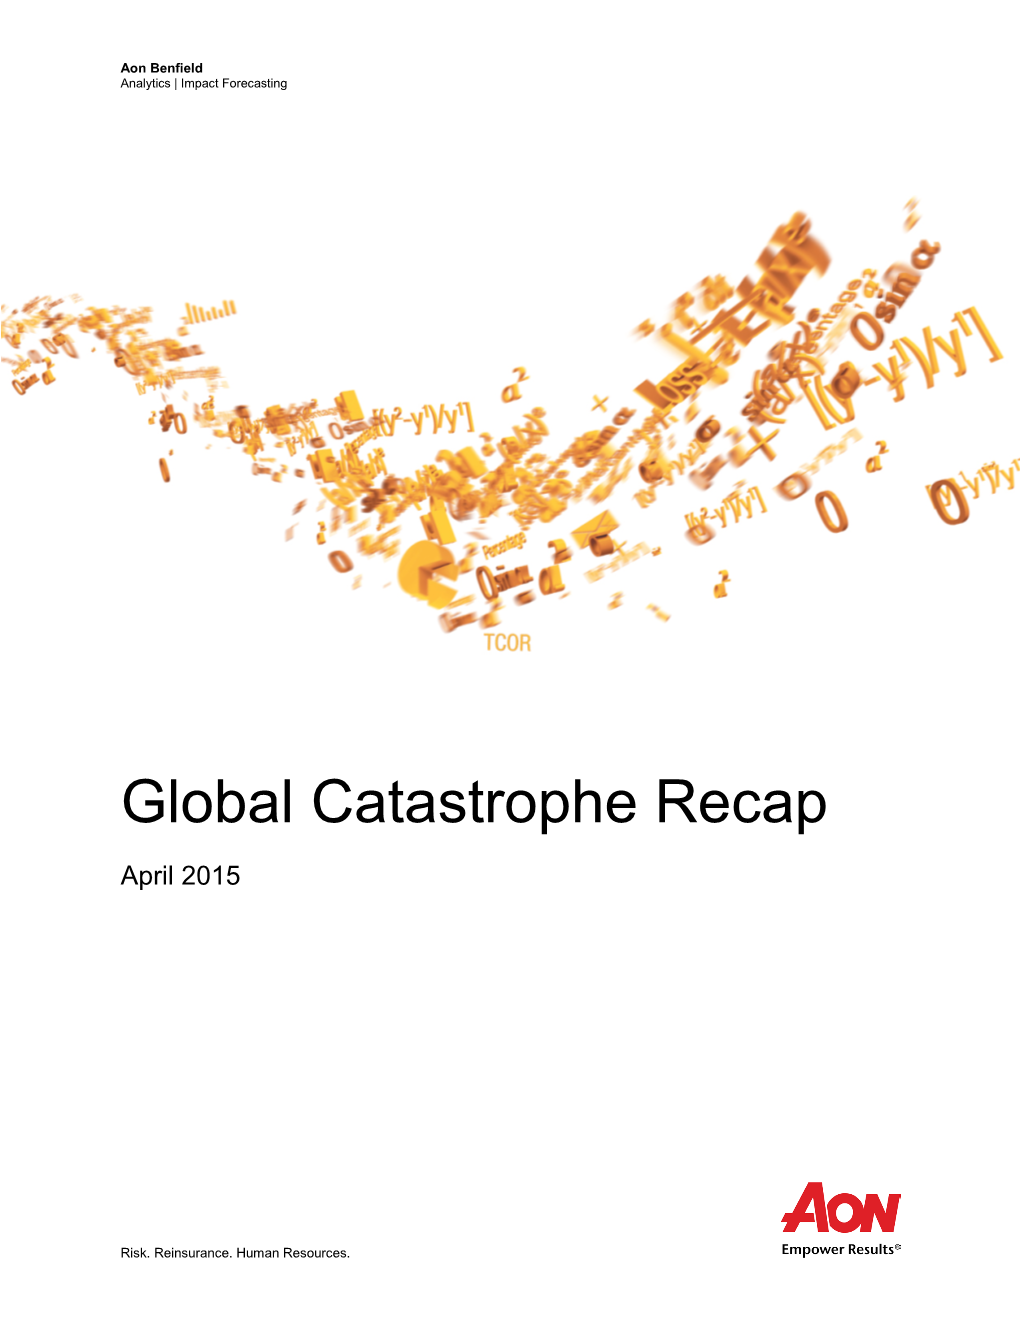 Global Catastrophe Recap April 2015